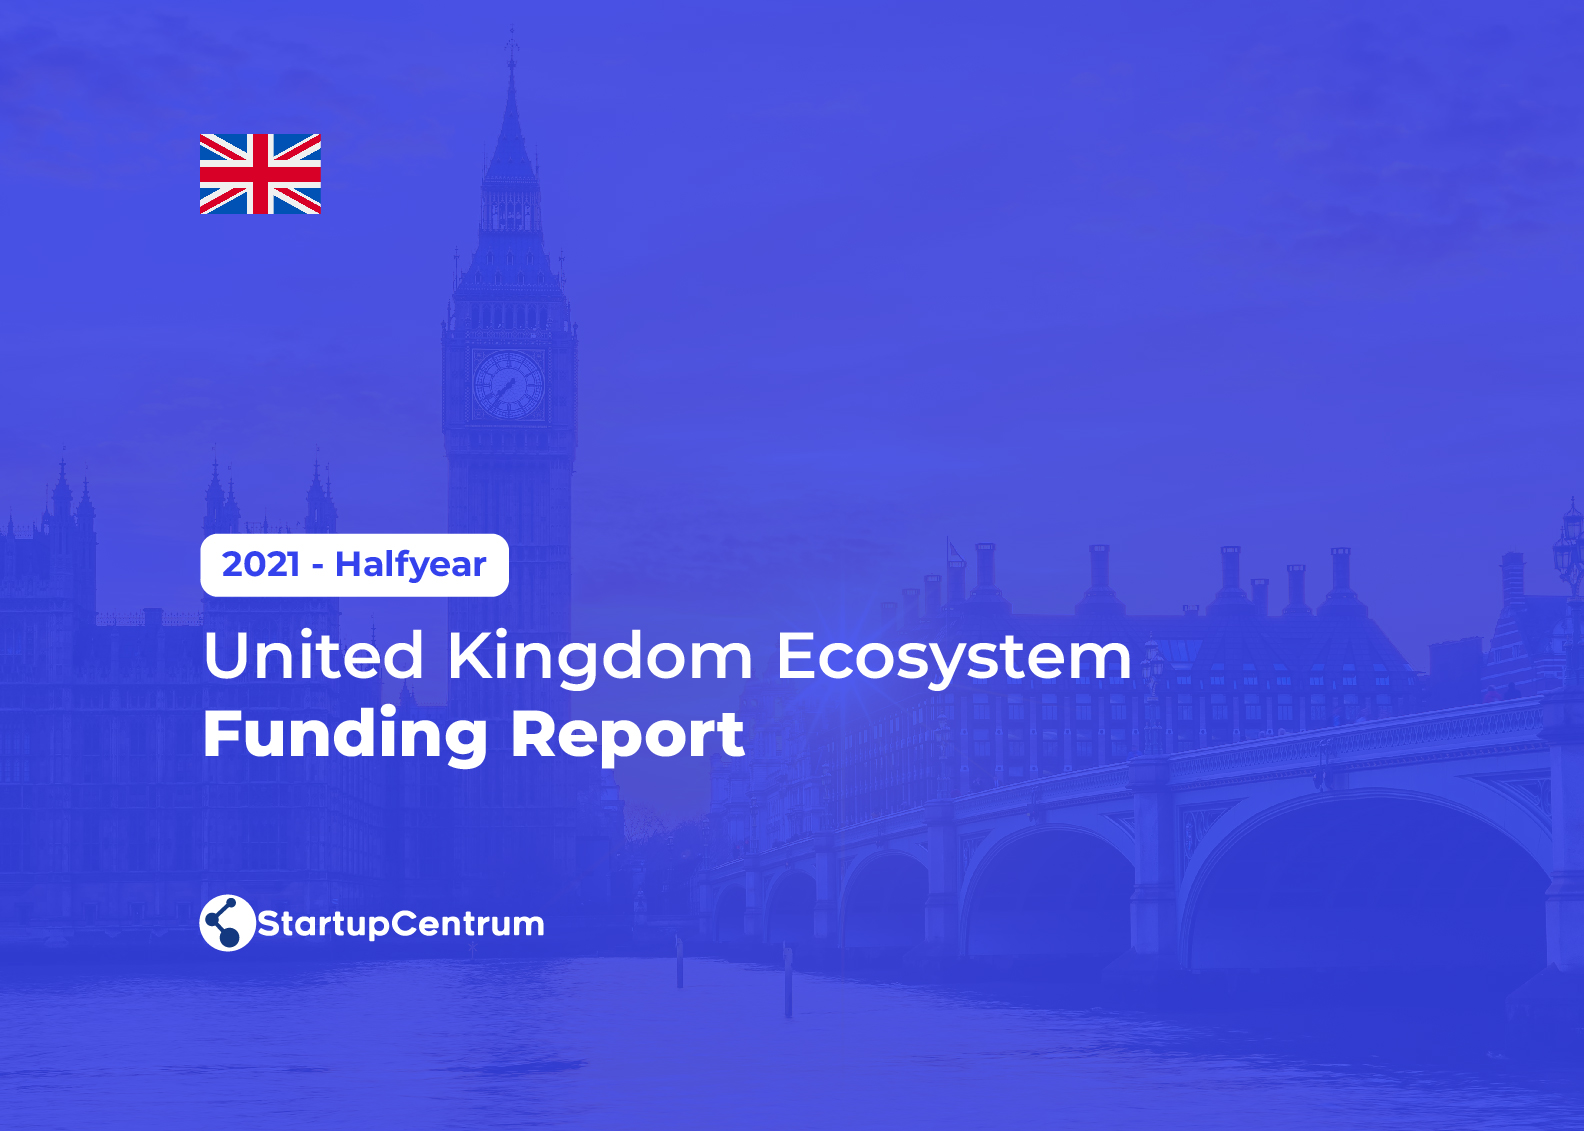 2021 - Halfyear United Kingdom Ecosystem Funding Report Cover Image